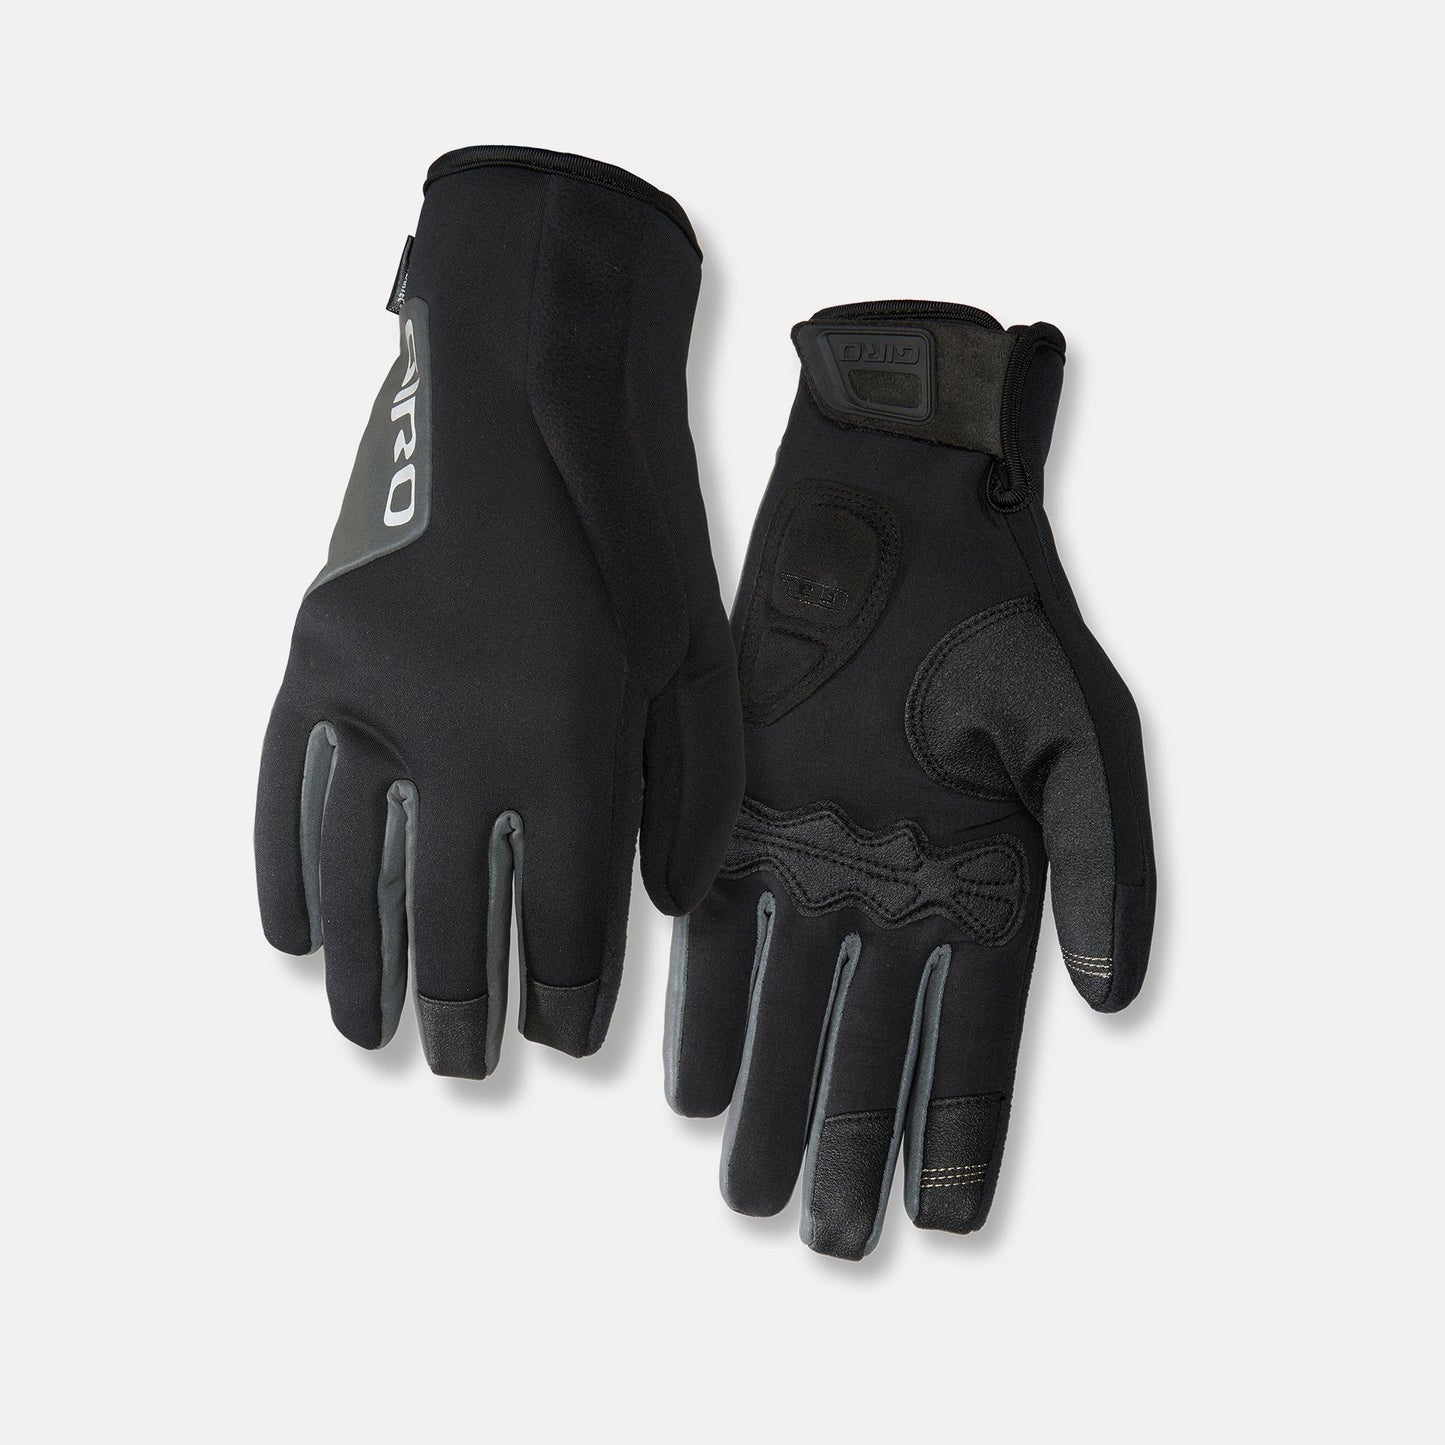 Giro Ambient 2.0 Winter Gloves - Black - Size XL